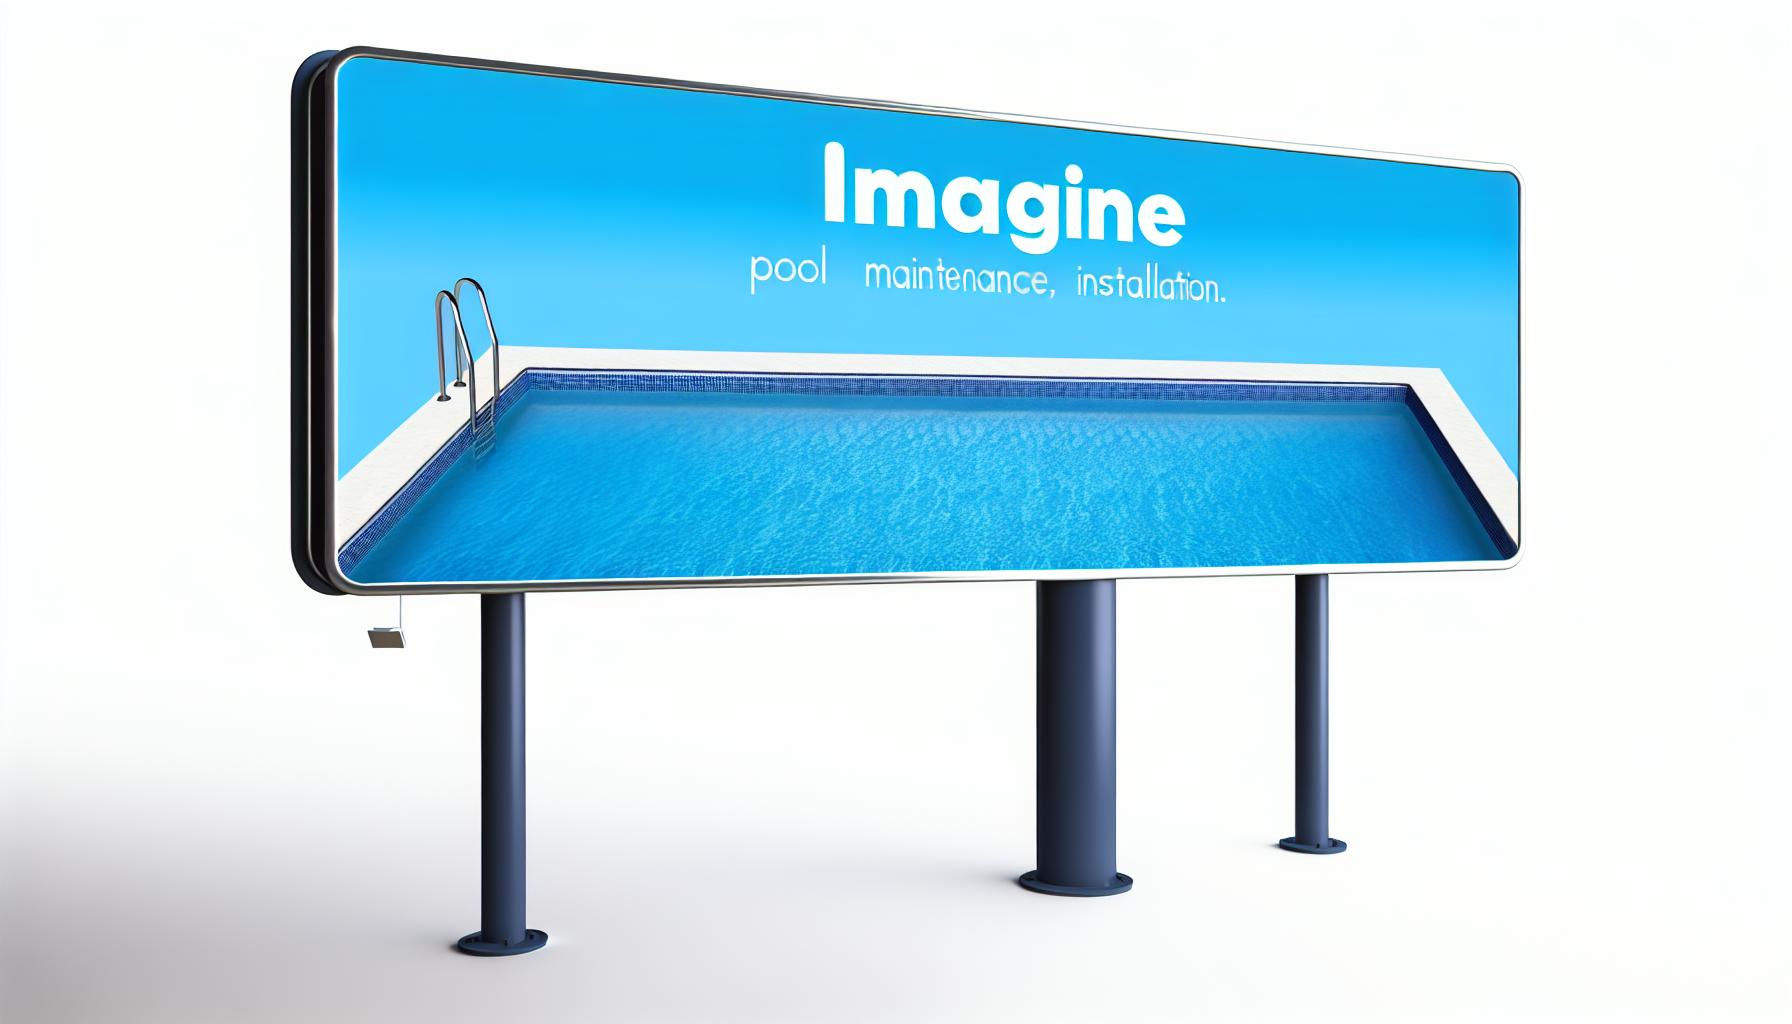 a billboard advertising a pool company